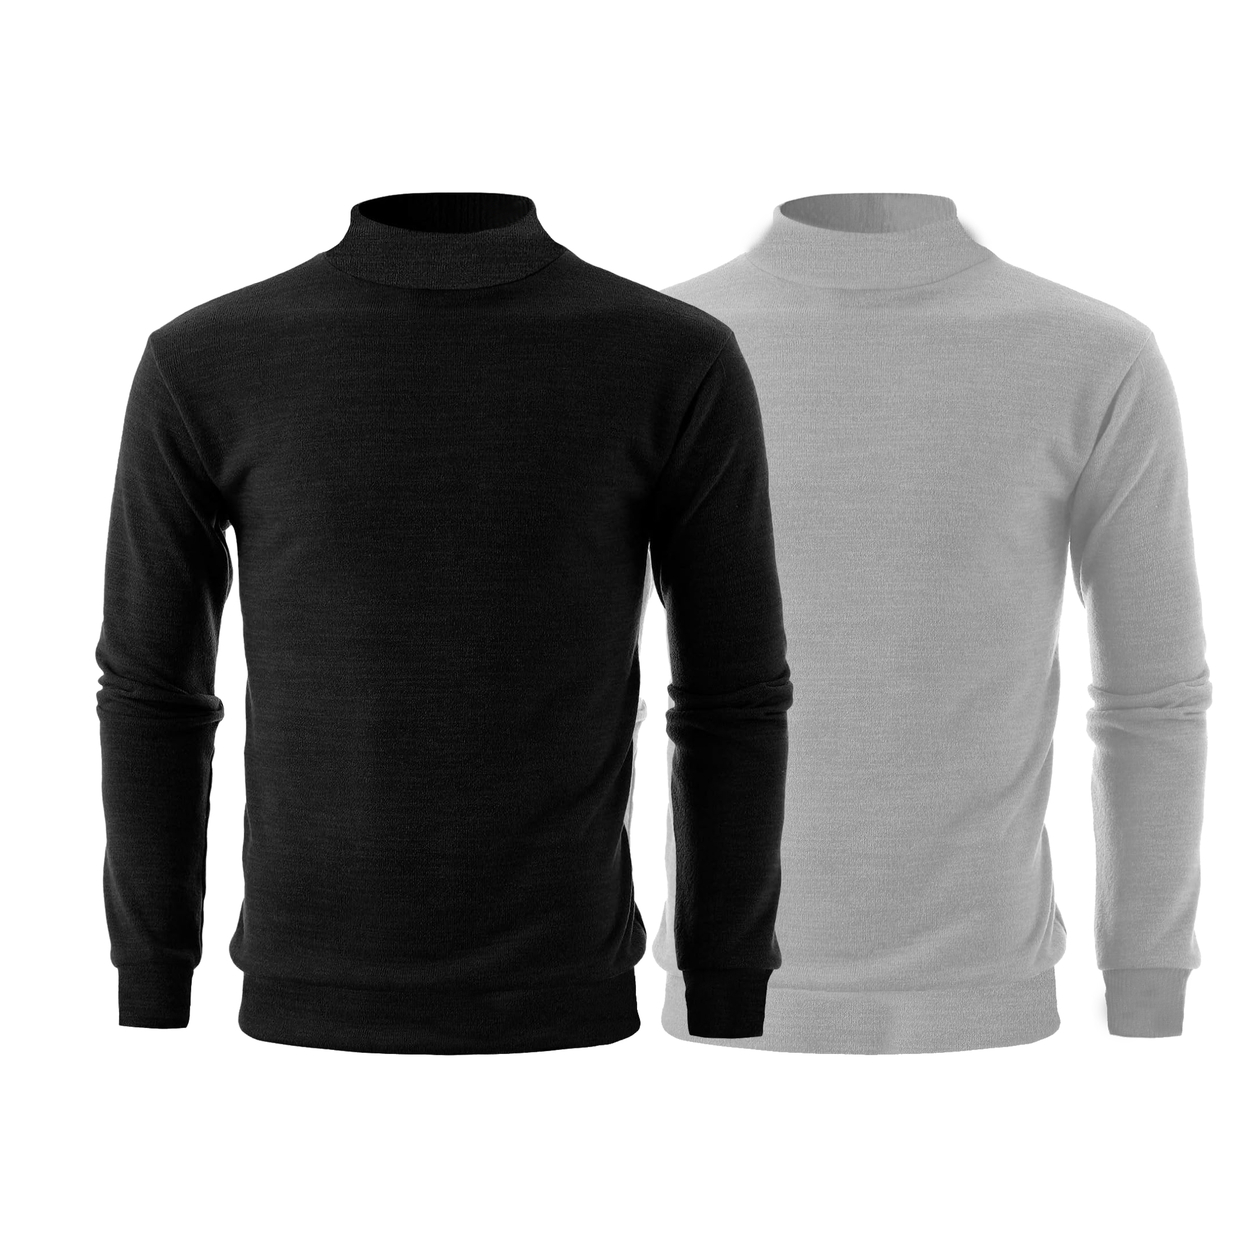 2-Pack: Men's Winter Warm Cozy Knit Slim Fit Mock Neck Sweater - Black& Burgundy, Small